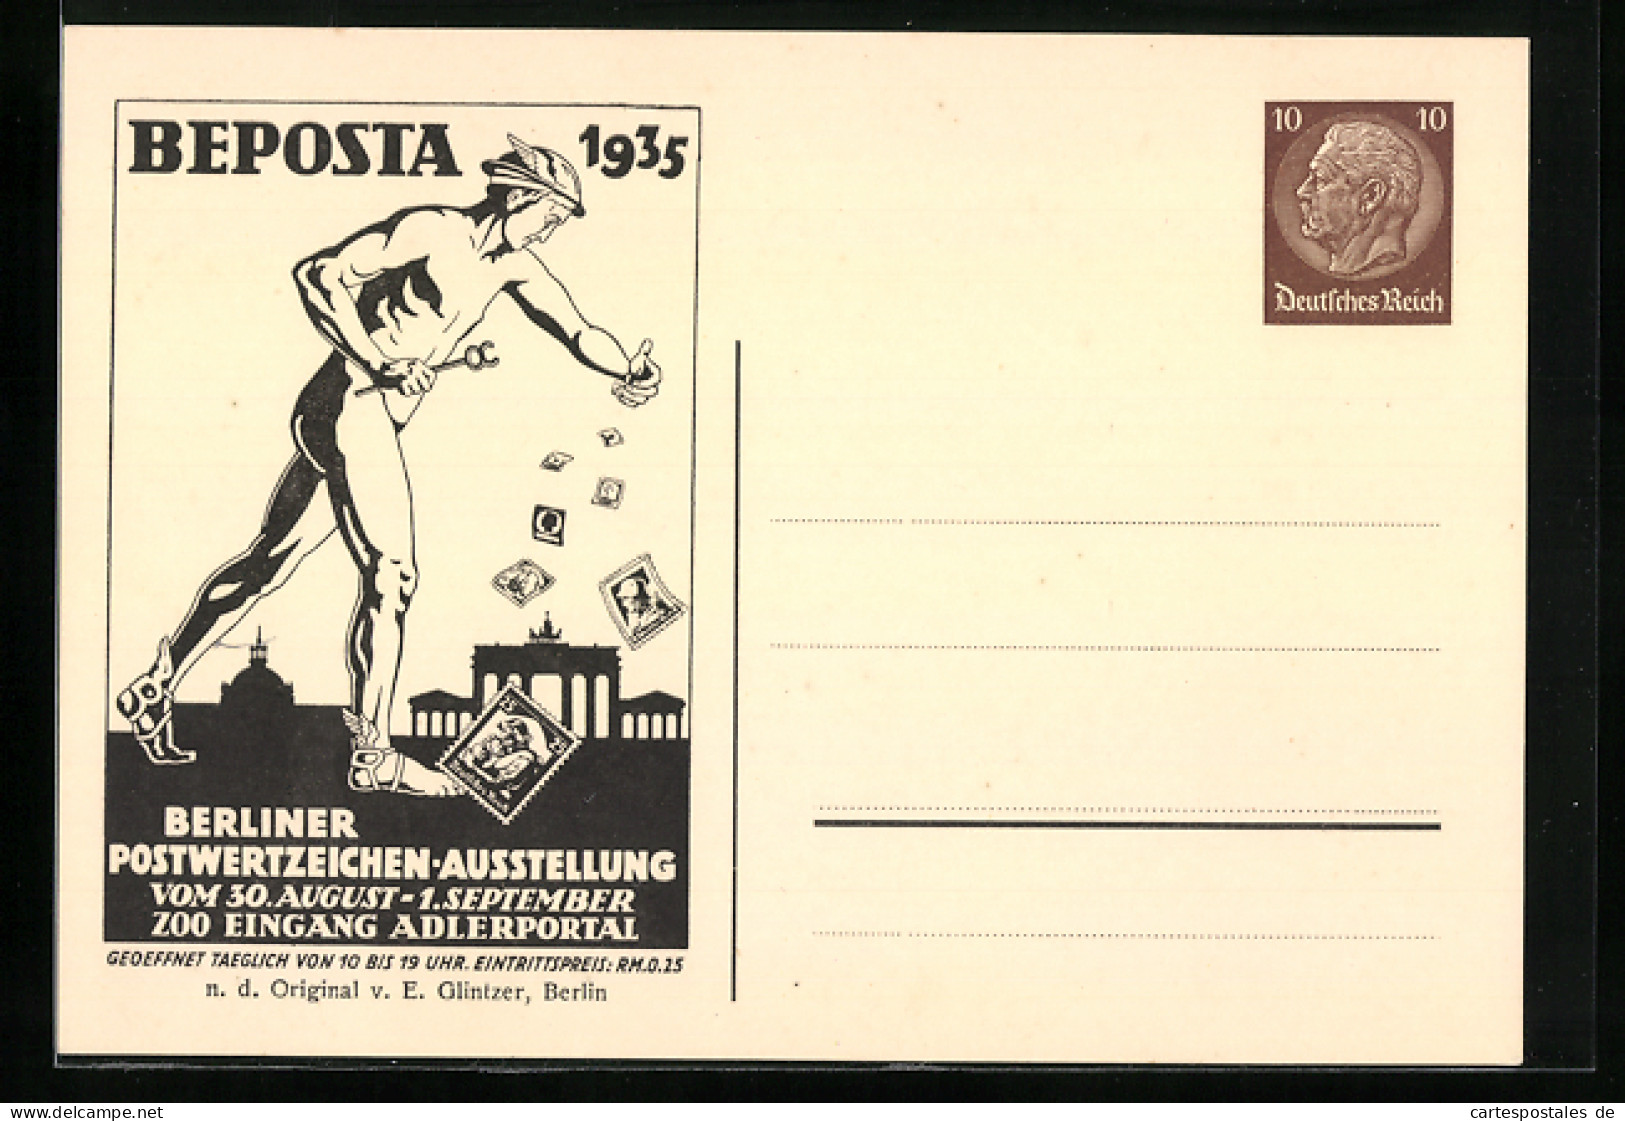 AK Berlin, Berliner Postwertzeichen-Ausstellung Beposta 1935, Ganzsache 10 Pfg.  - Cartoline